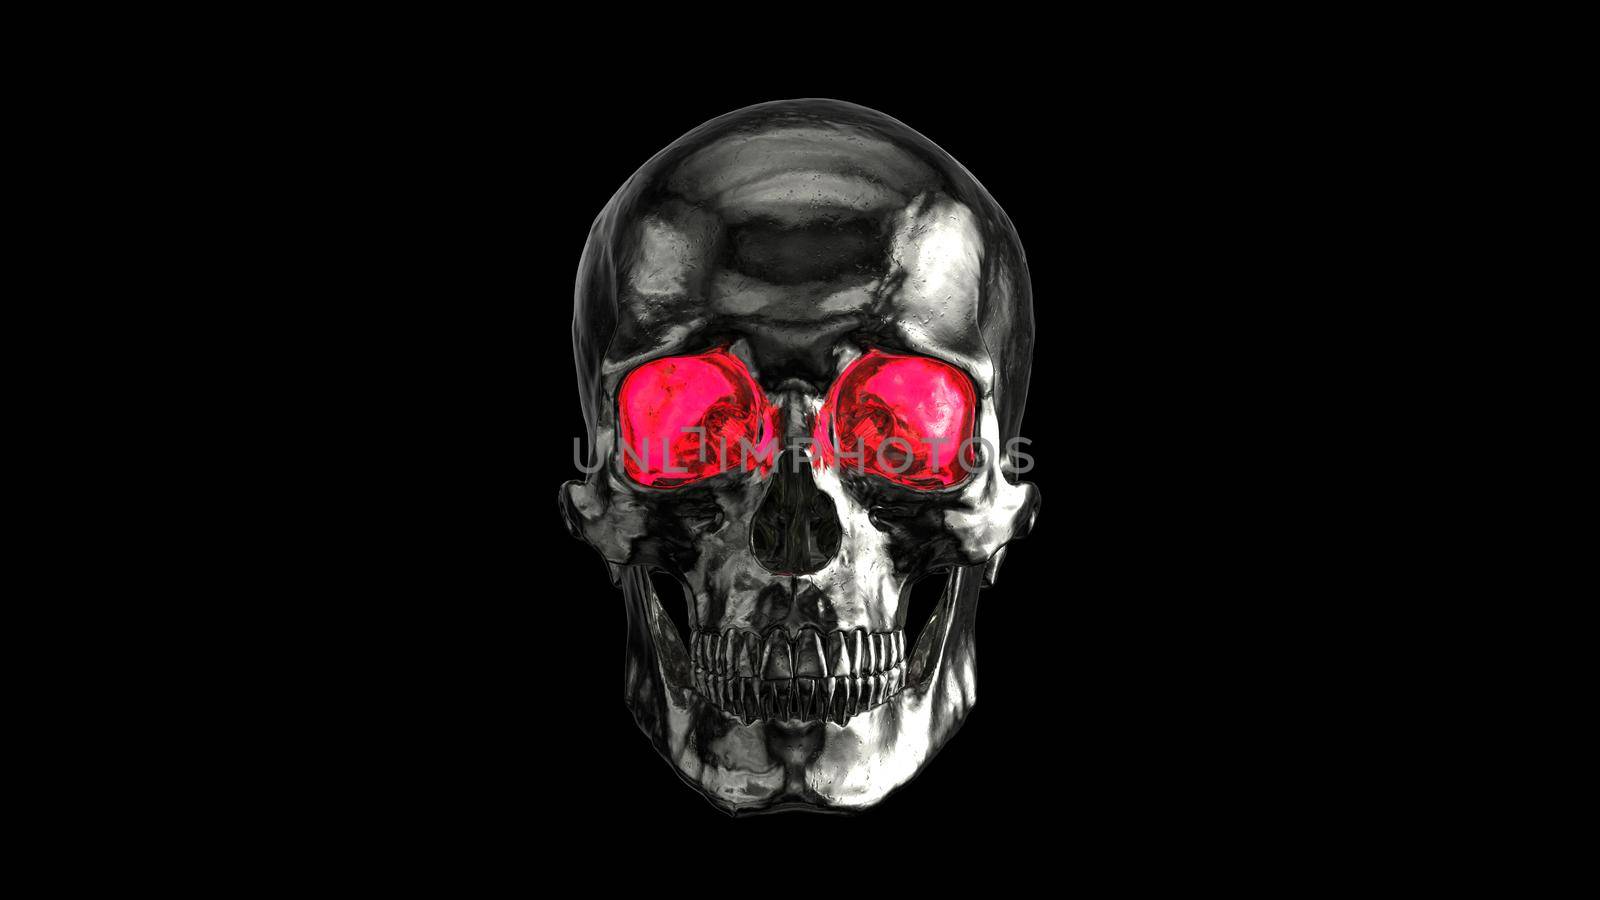 Metallic Human Skull with red eyes 3d render by bawan